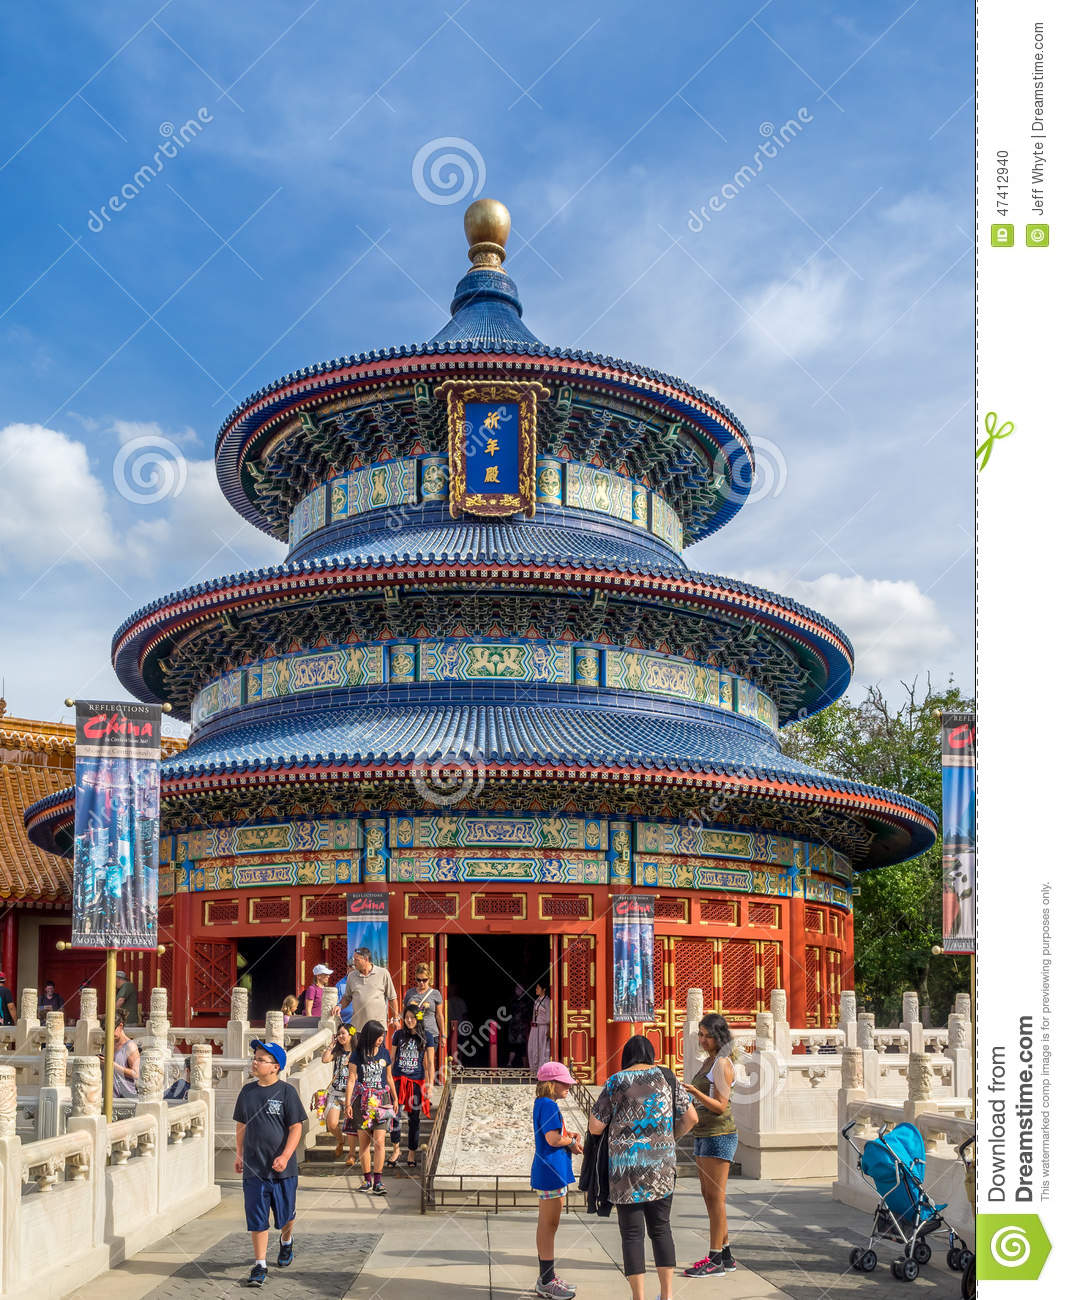 Chinese Pavilion At The World Showcase At Epcot Center Disney World 